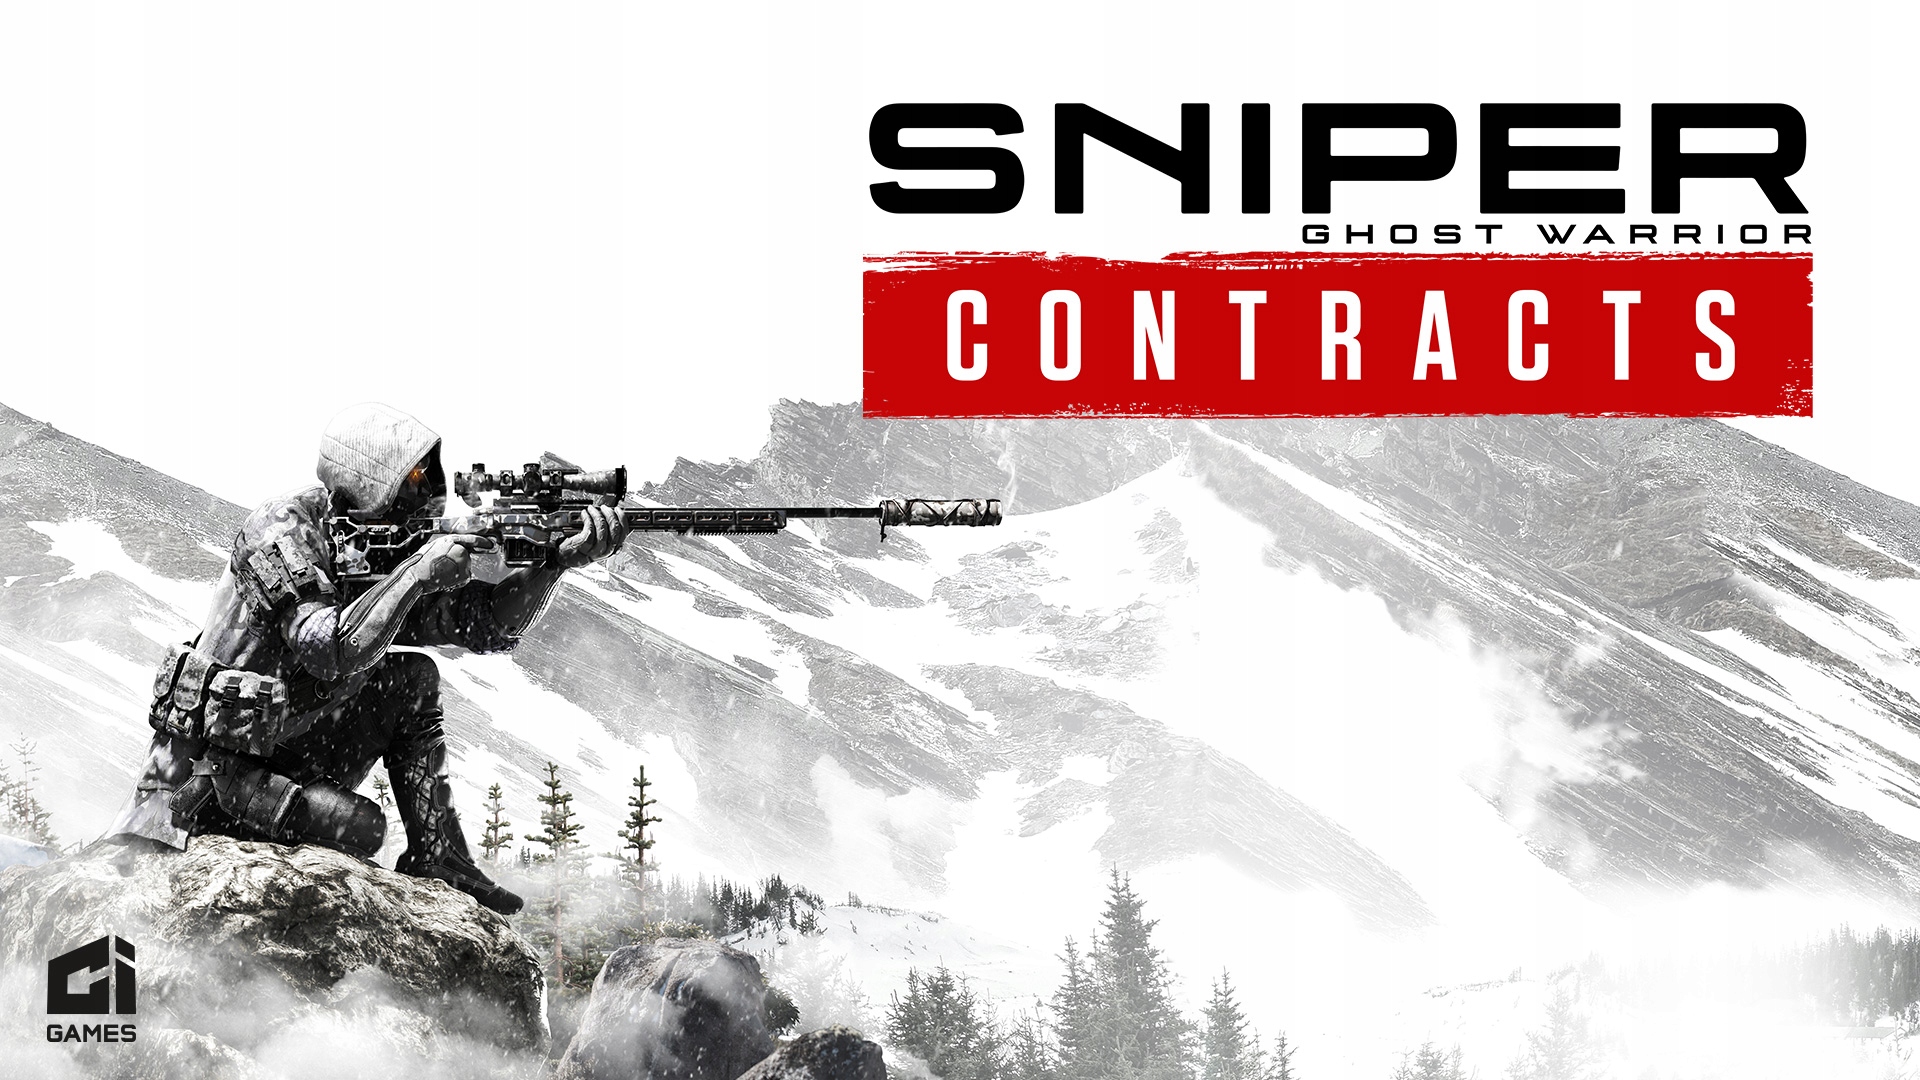 Sniper Ghost Warrior Contracts Порт имени Колчака